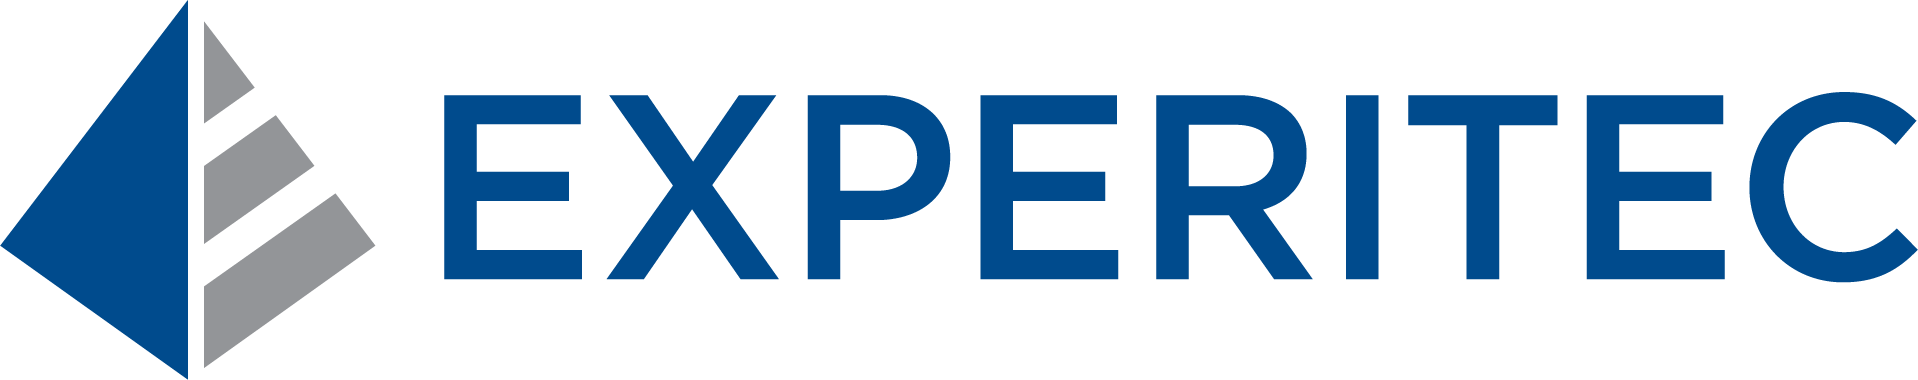 Experitec Inc. logo